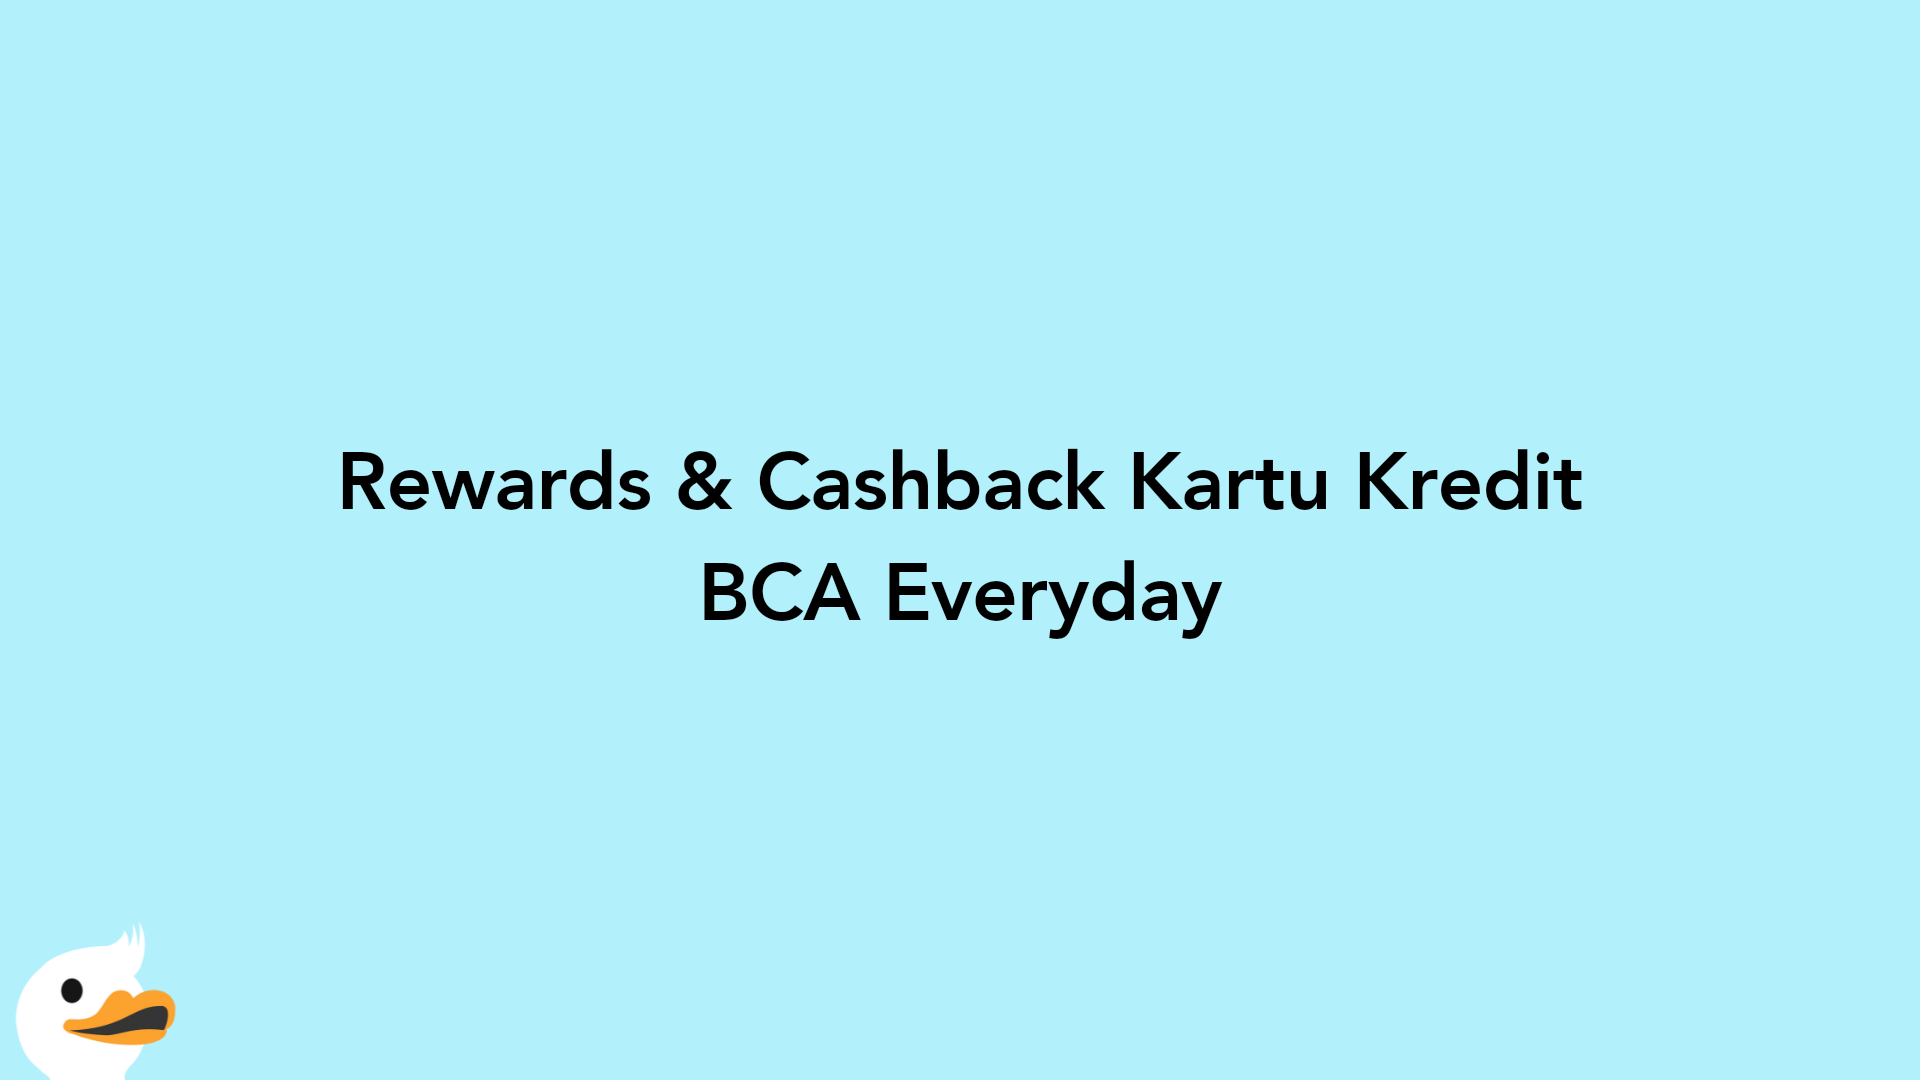 Rewards & Cashback Kartu Kredit BCA Everyday